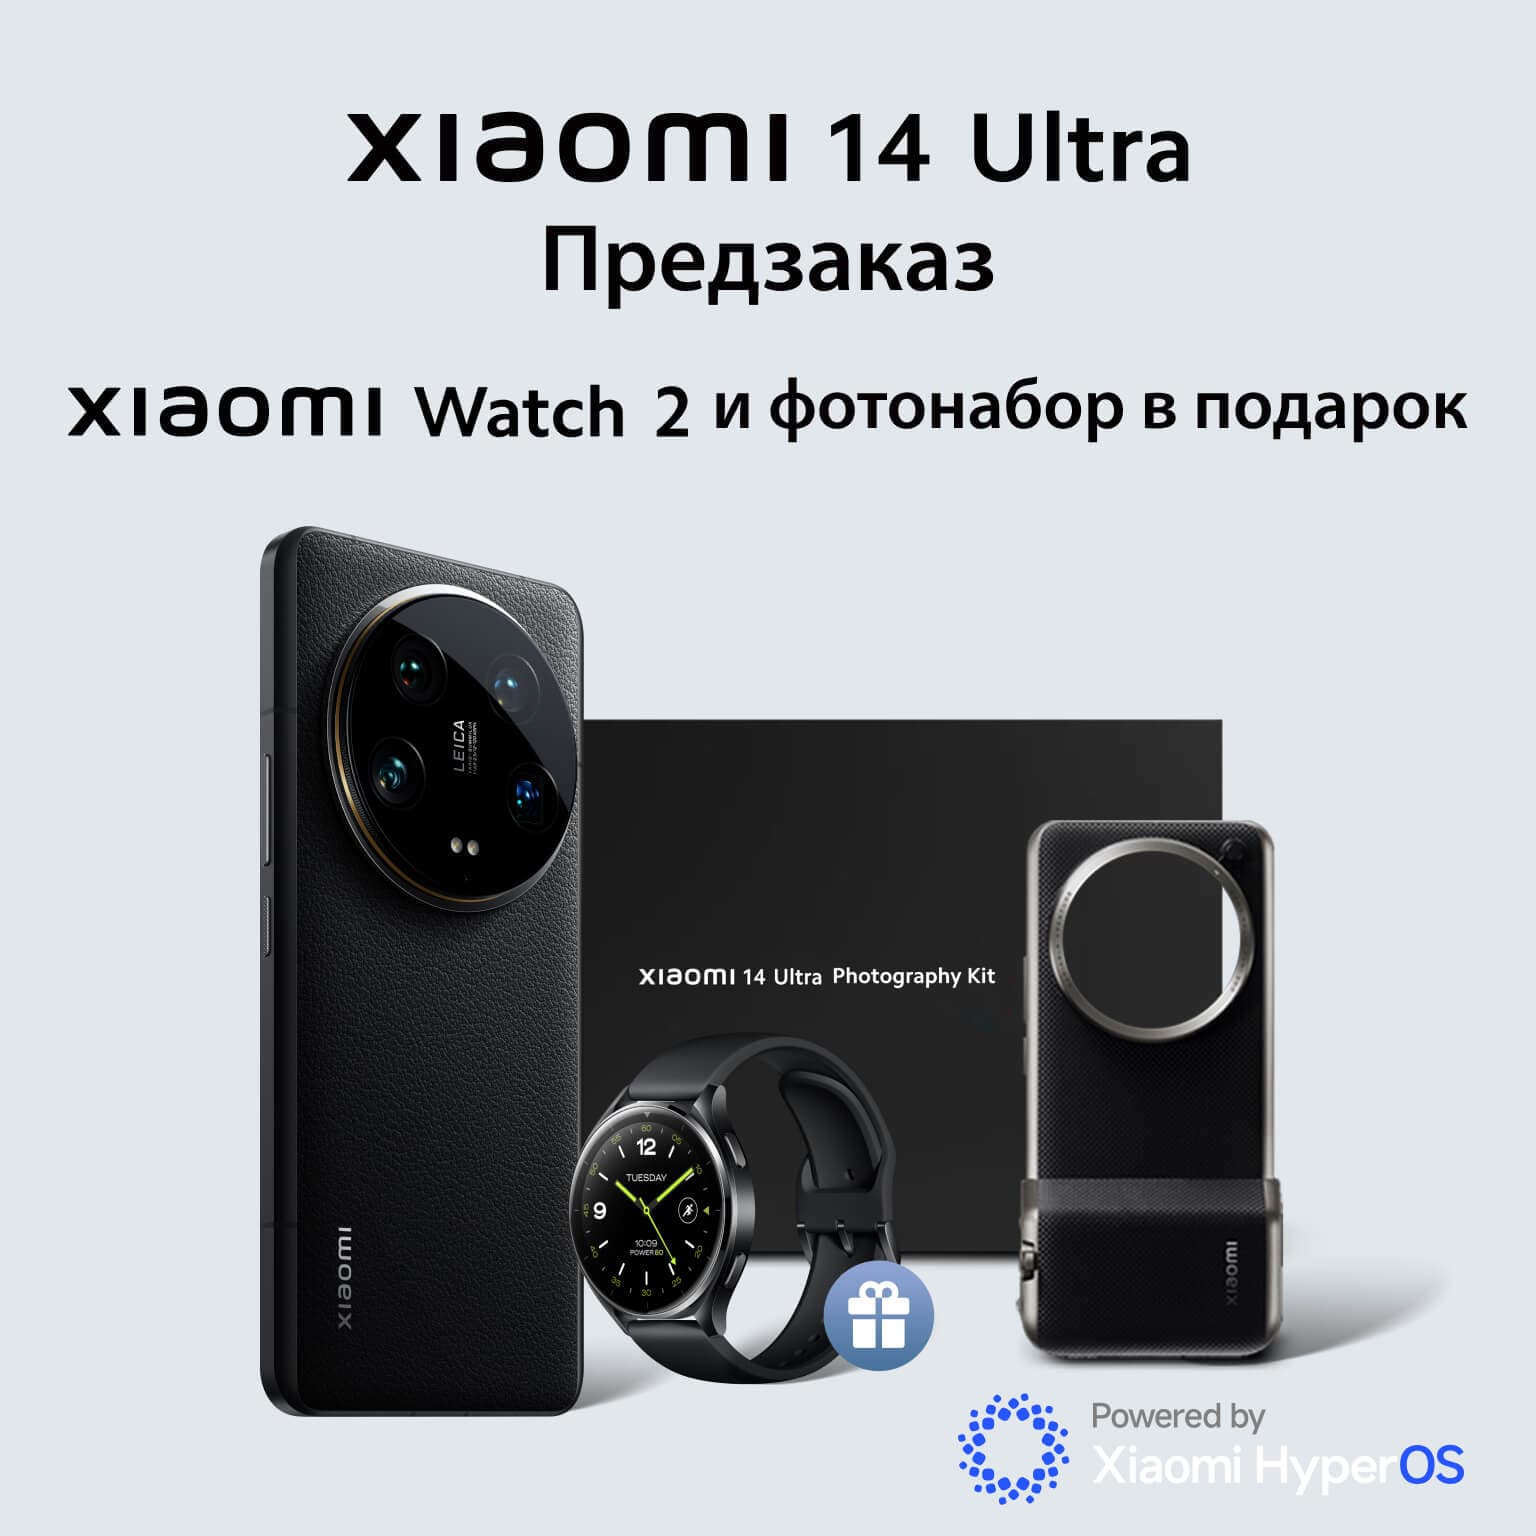 Xiaomi 14 Ultra предзаказ. Xiaomi Watch 2 и фотонабор в подарок